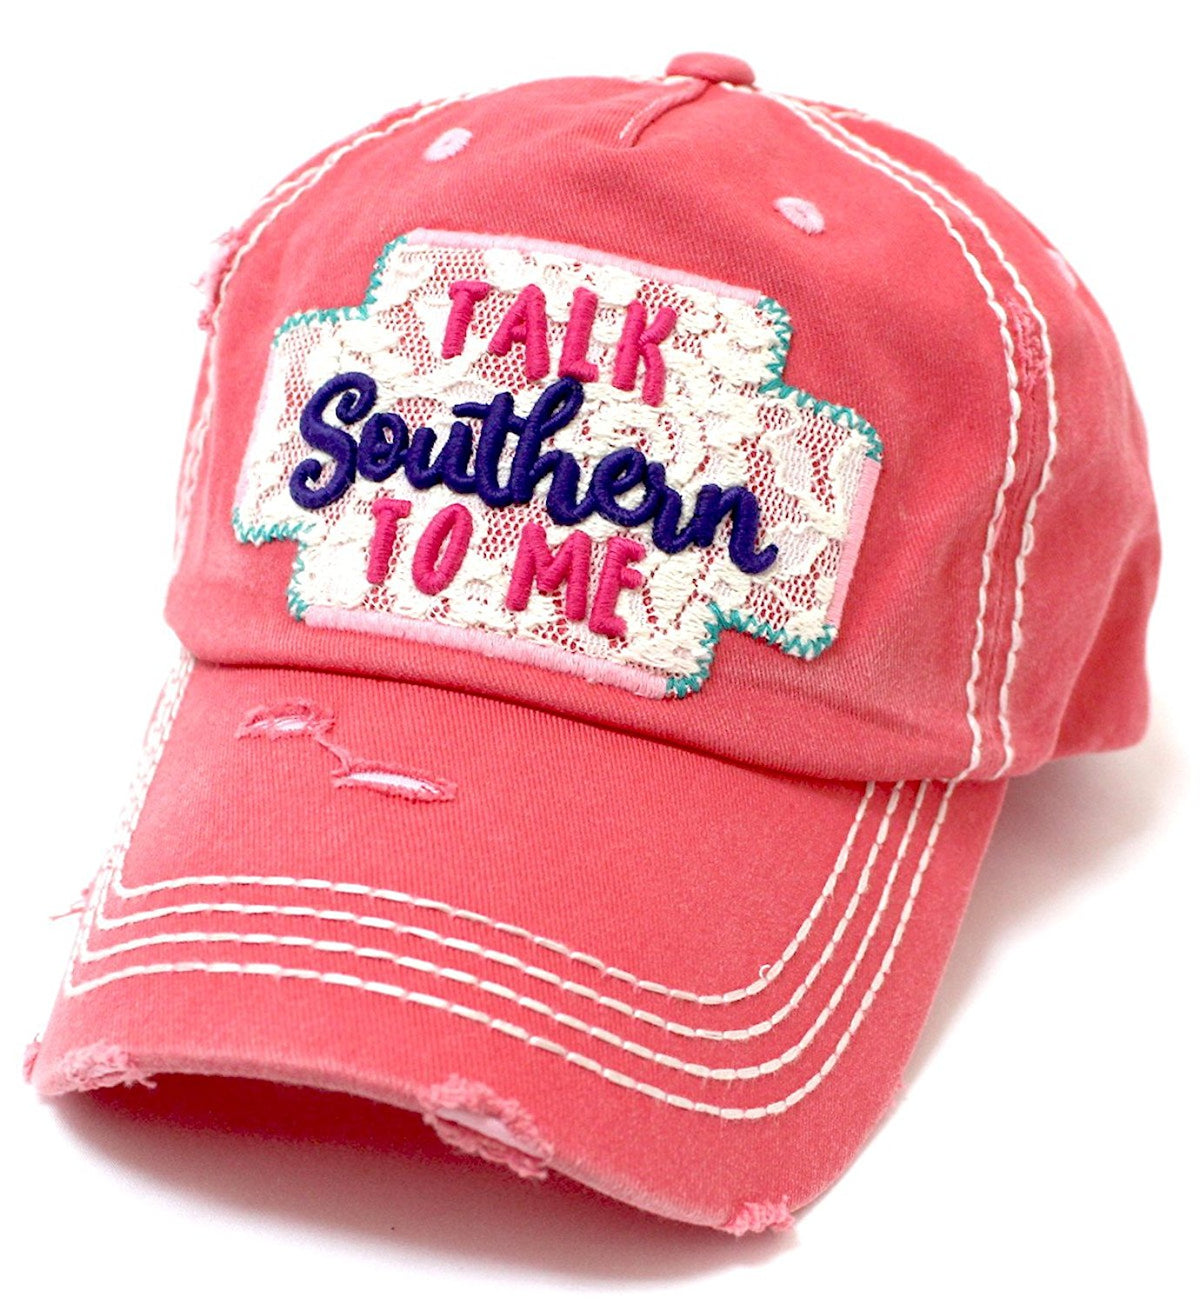 CAPS 'N VINTAGE Women's Distressed Talk Southern To Me Lace Embroidery Vintage Cap-Pink - Caps 'N Vintage 